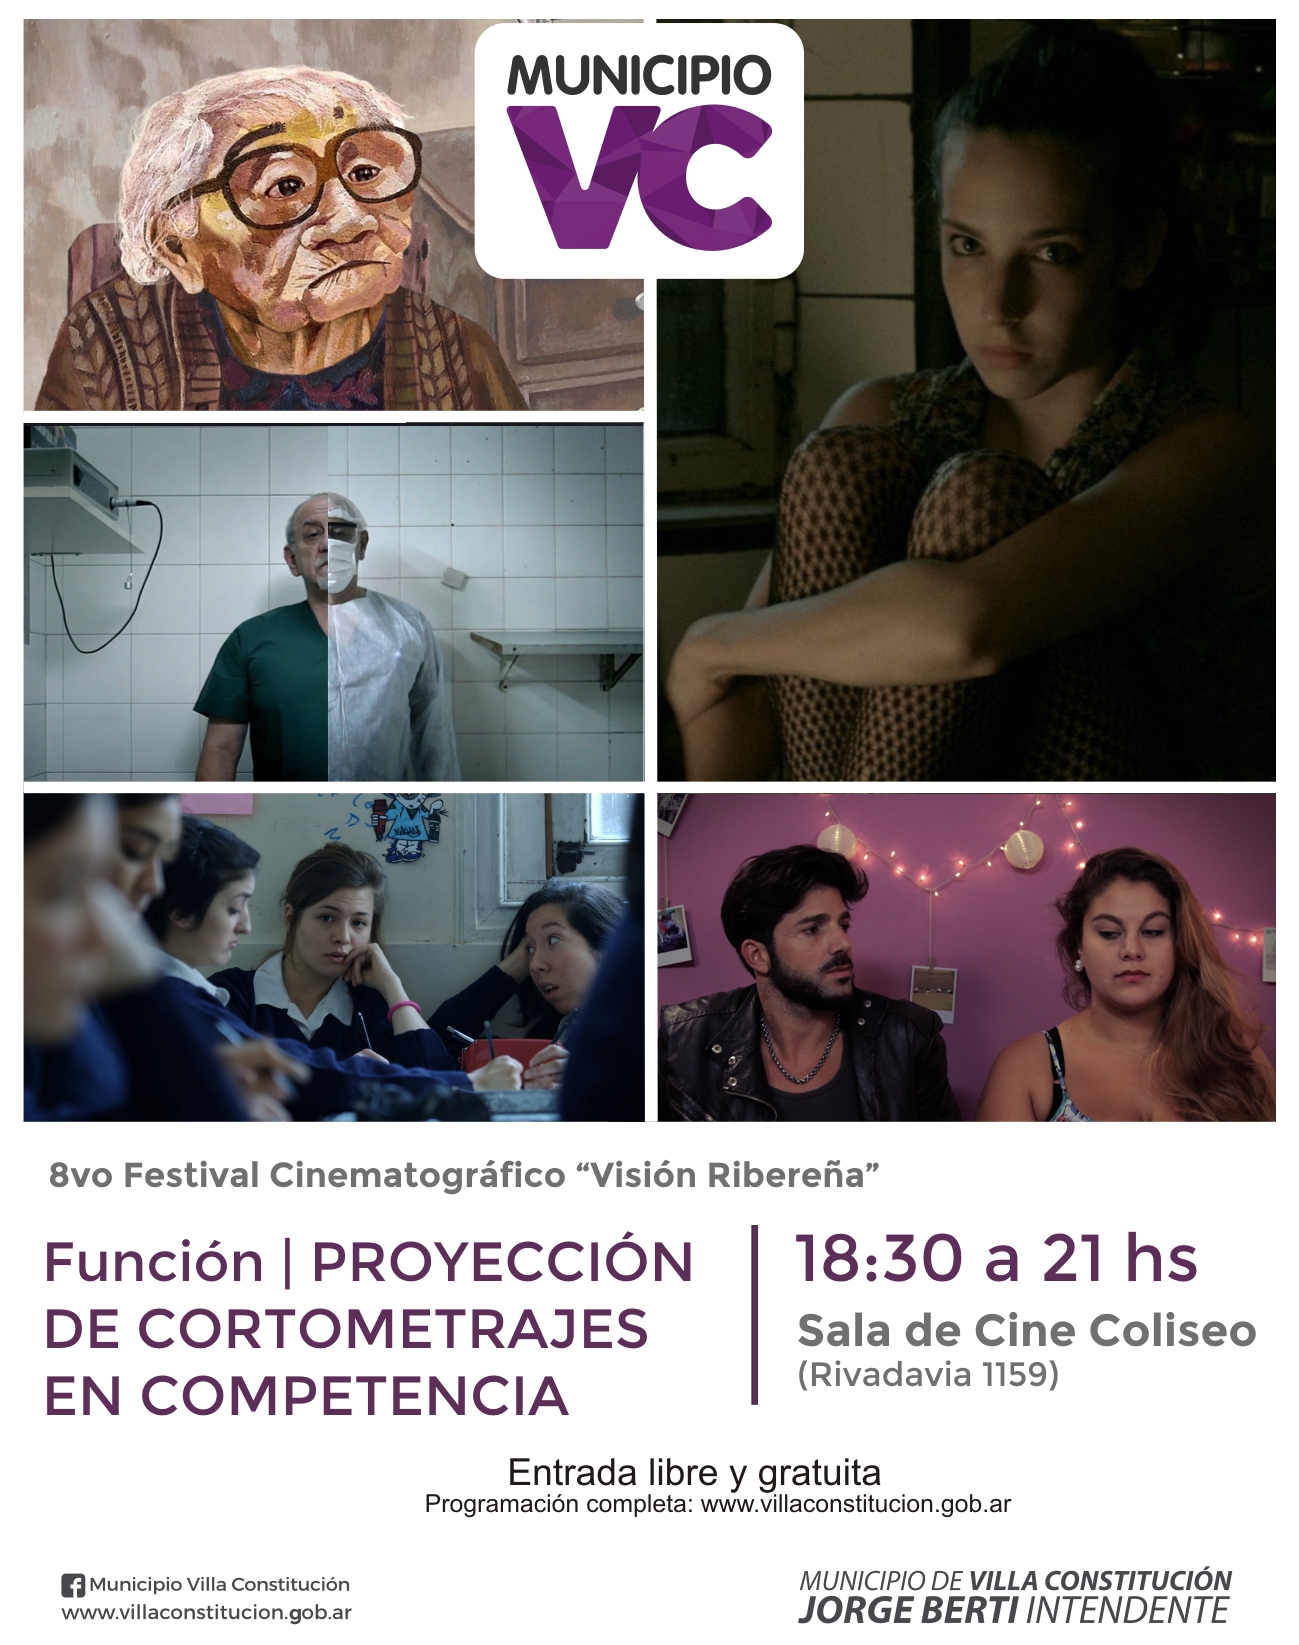 FUNCIÓN DE HOY | 8vo Festival Cinematográfico “Visión Ribereña”